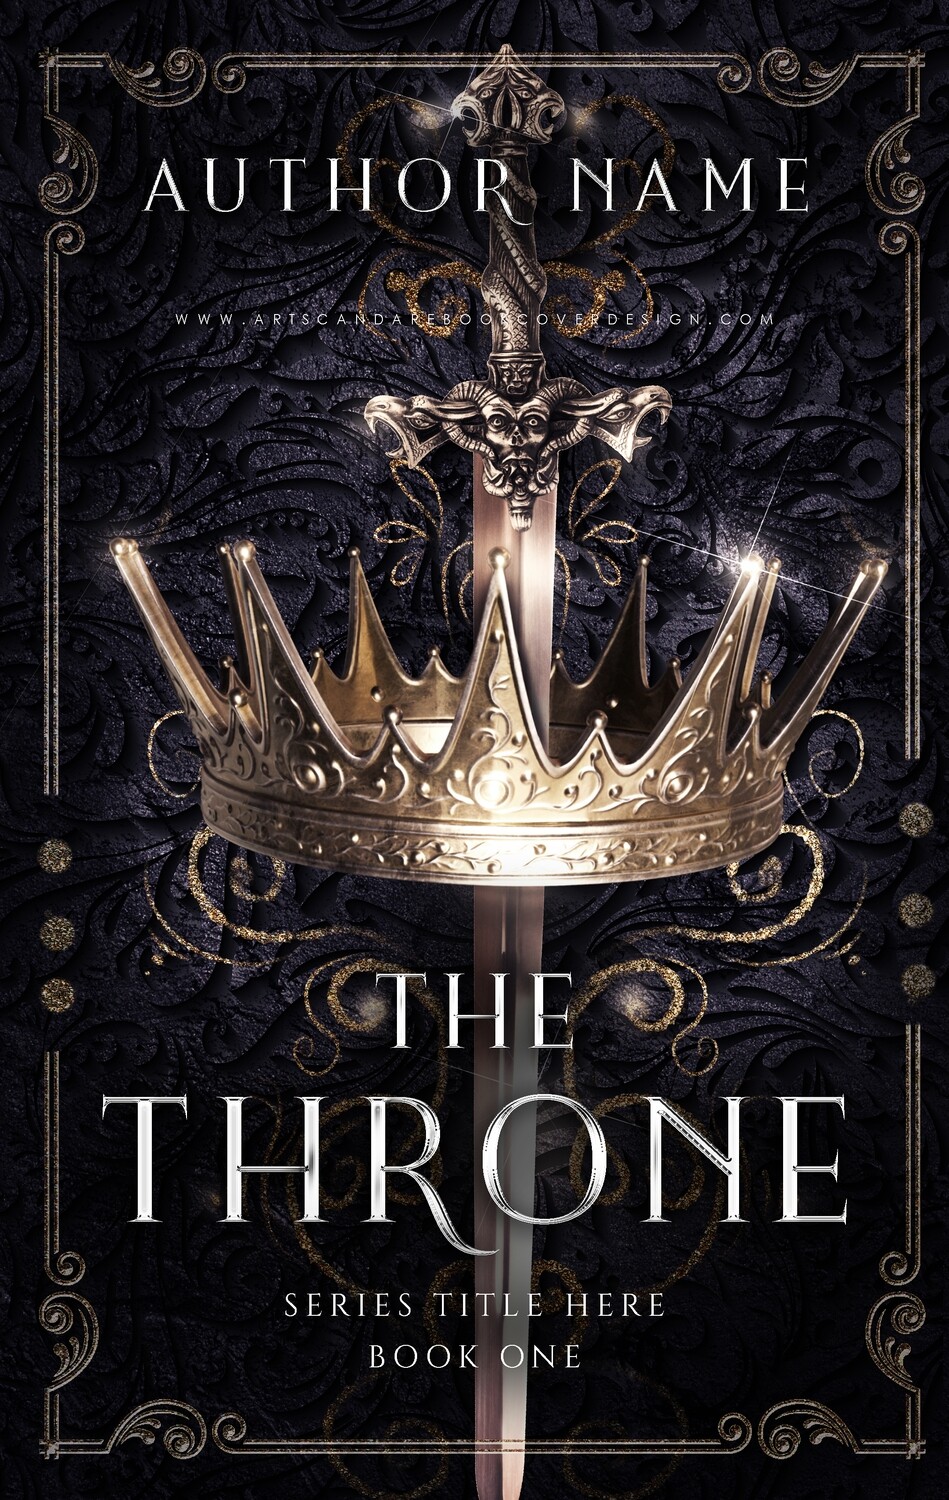 Ebook: The Throne